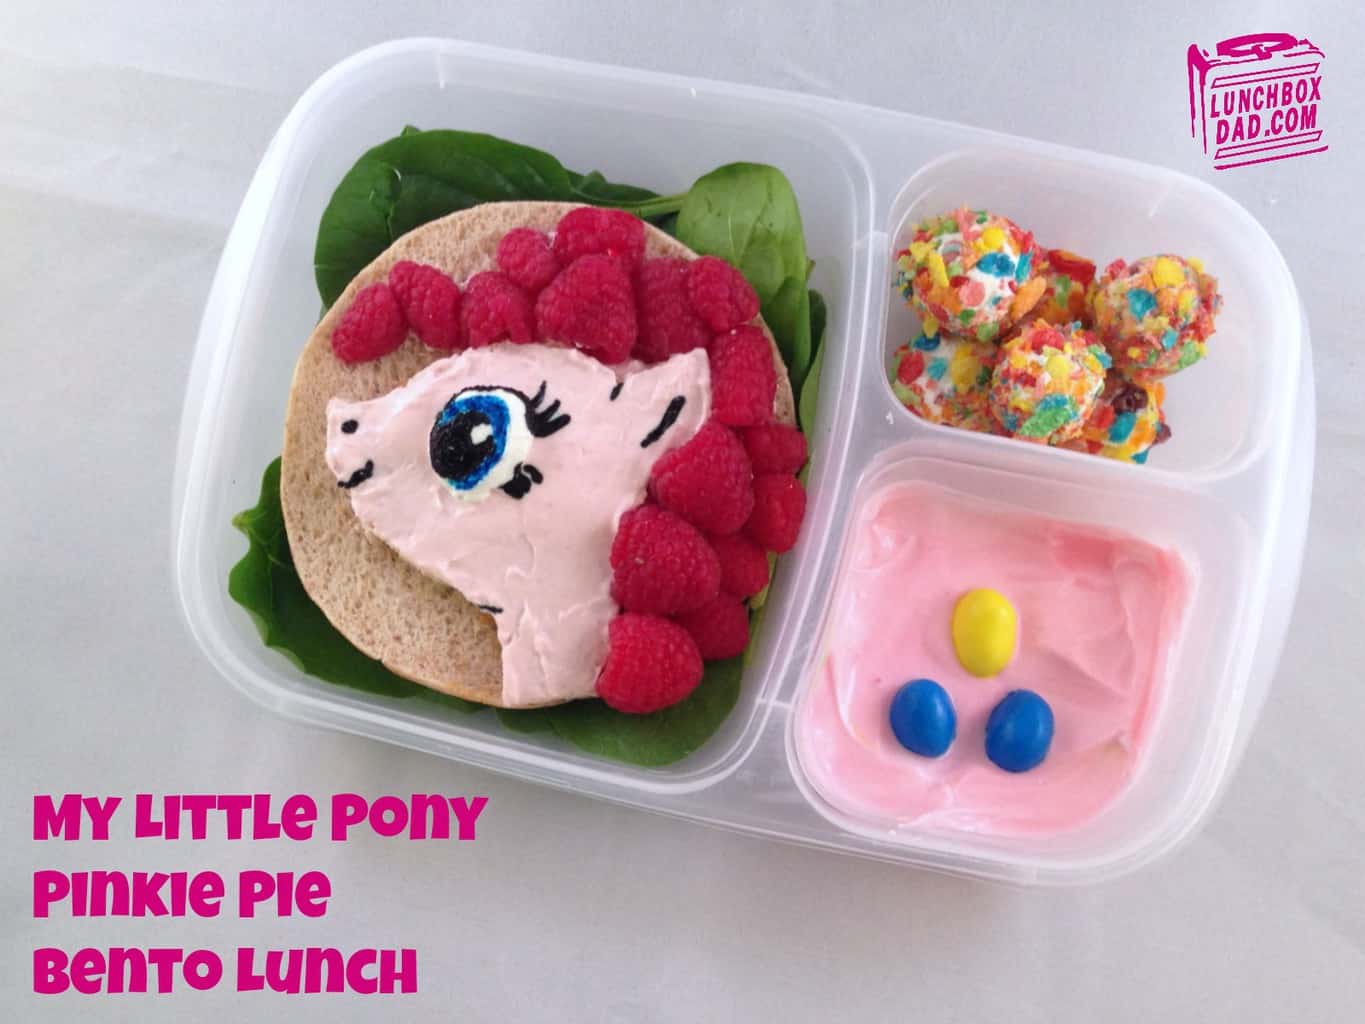 https://www.amusingfoodie.com/wp-content/uploads/2014/03/My-Little-Pony-Pinkie-Pie-2-3.jpg